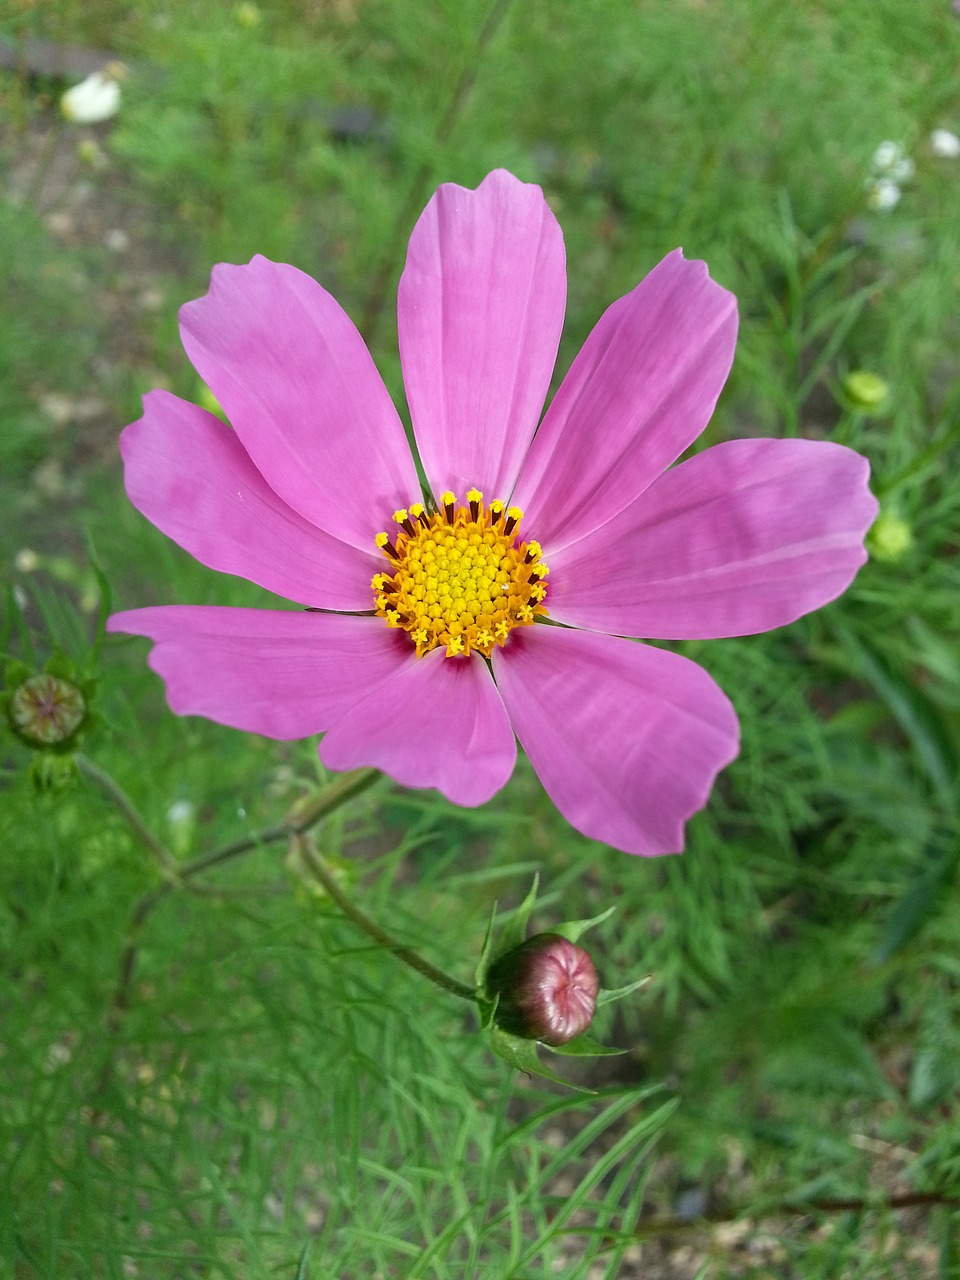 Image - flower cosmos petals pink stamens